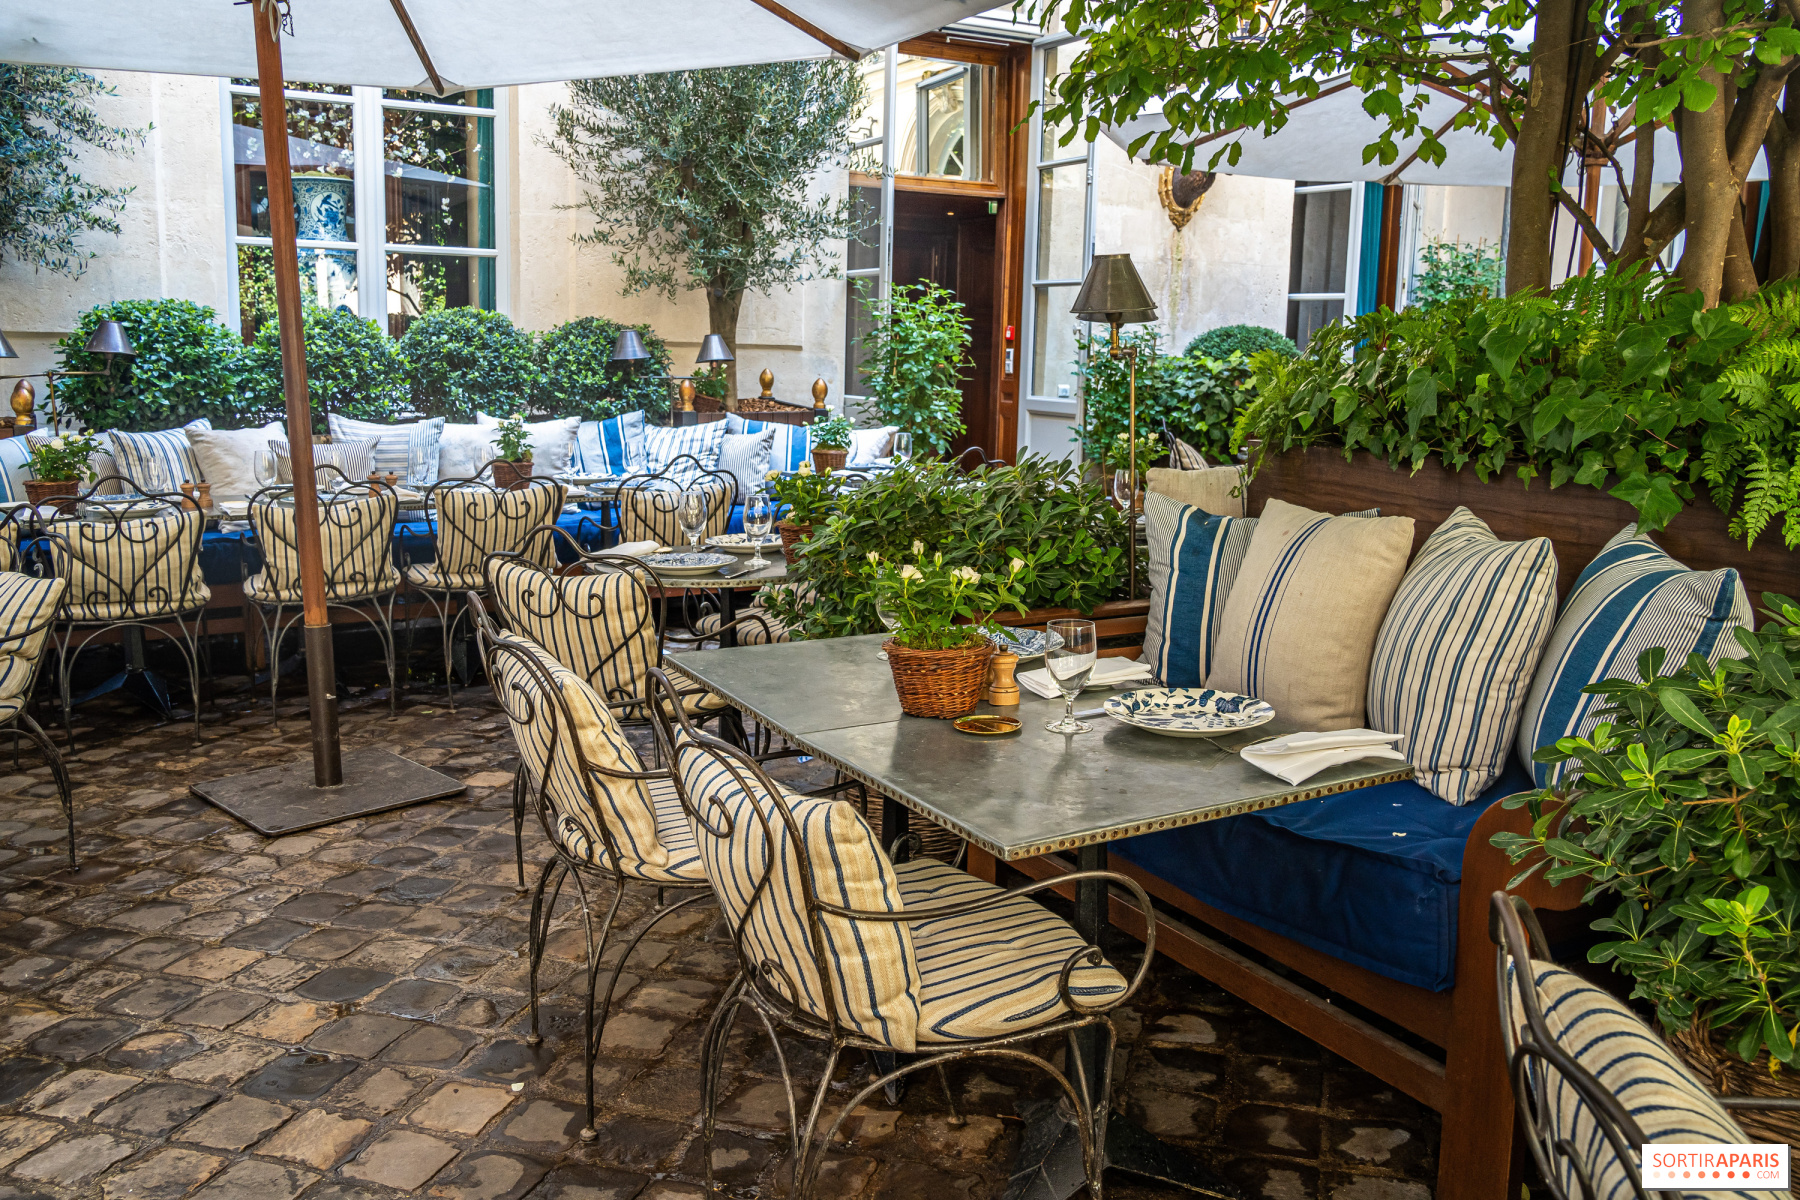 Ralph's restaurant opens their sublime hidden terrace with Sunday brunch -  